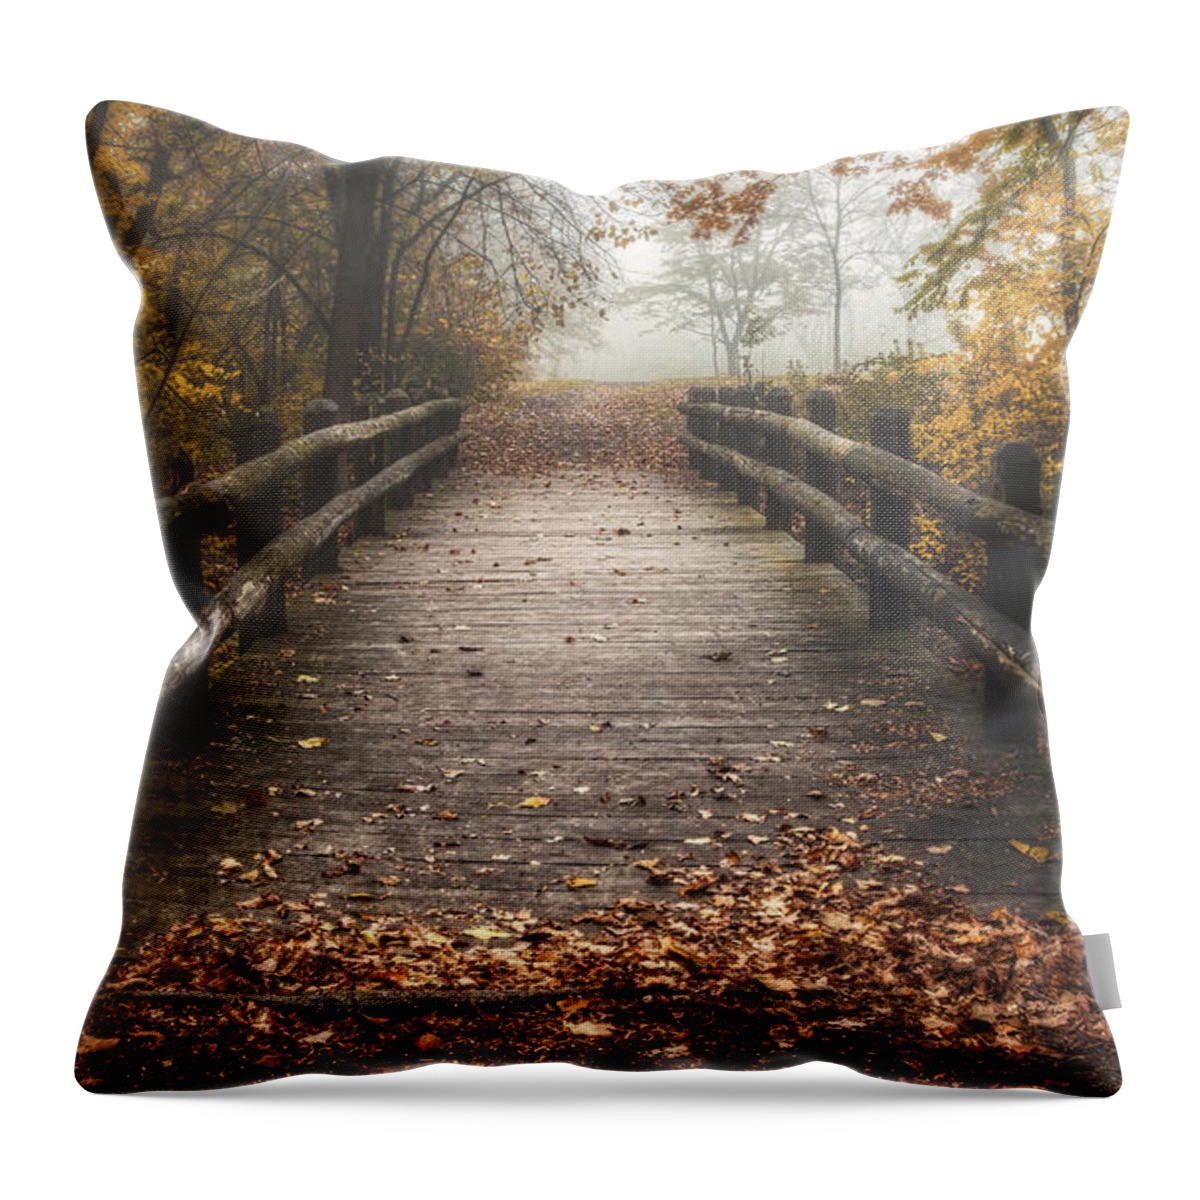 Bridge Throw Pillow featuring the photograph Foggy Lake Park Footbridge by Scott Norris